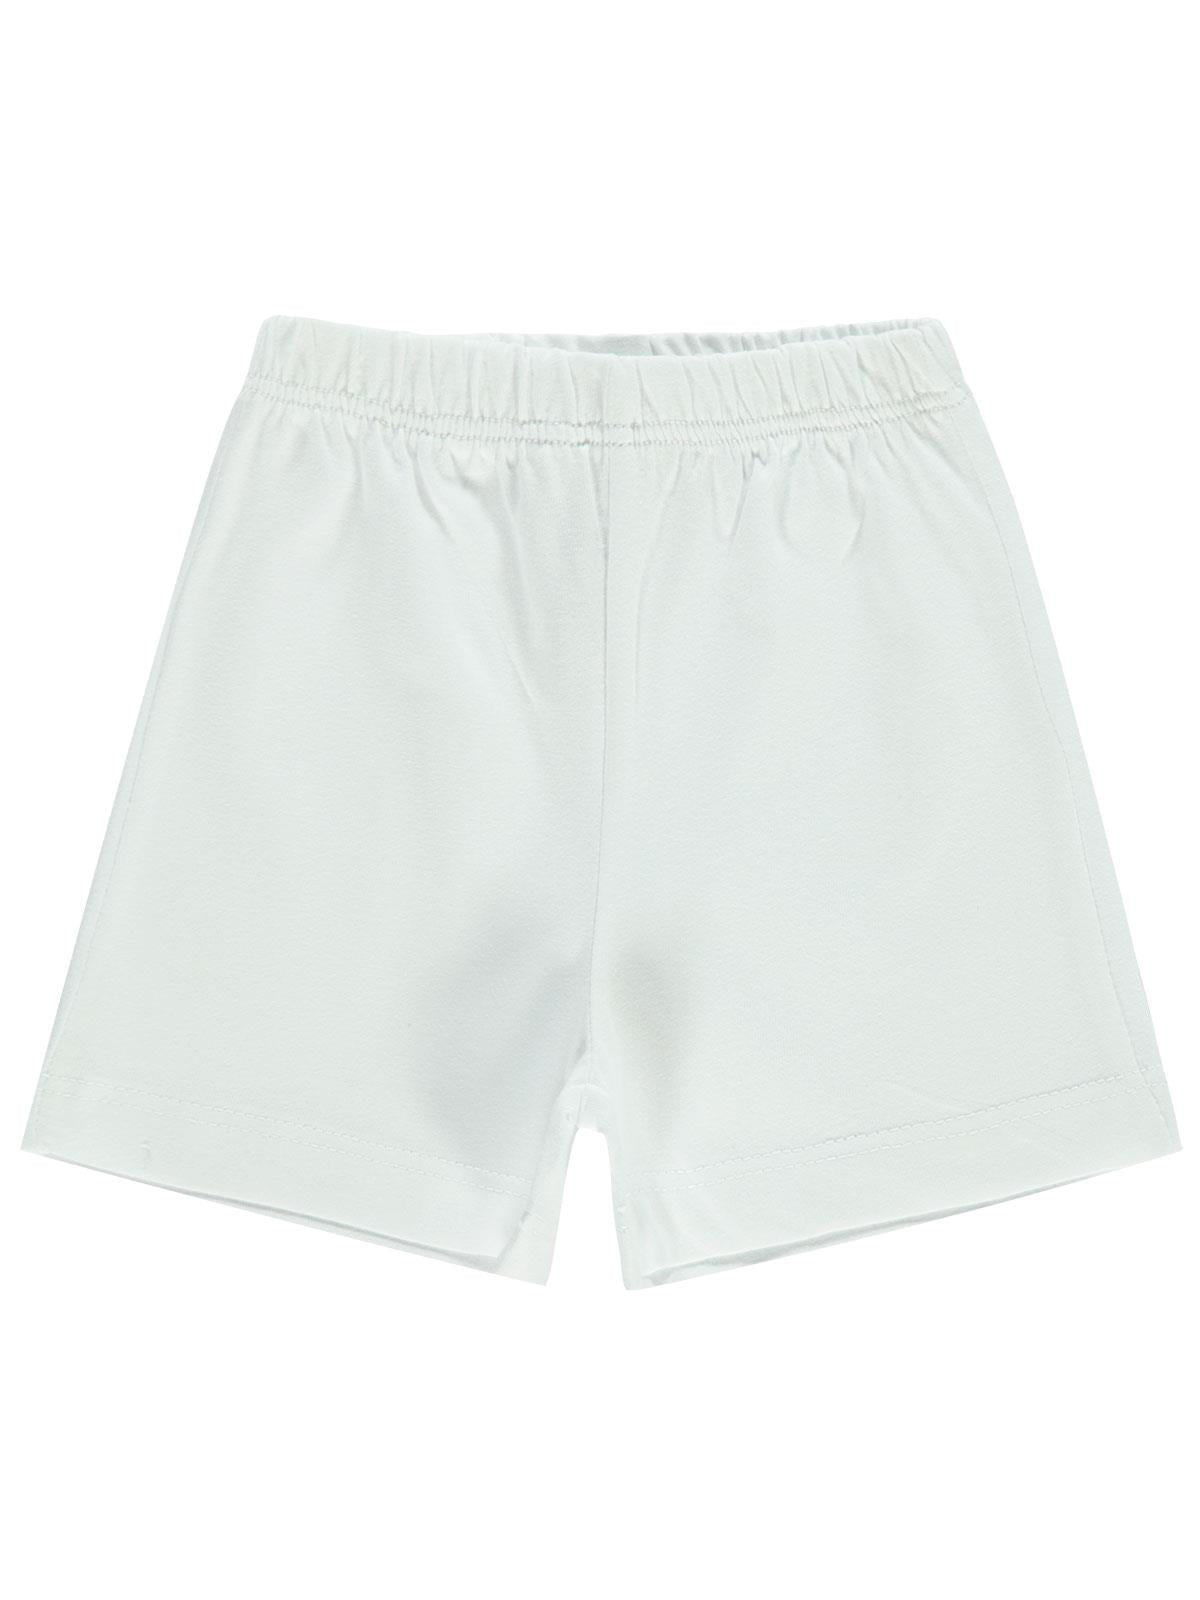 Civil Baby Cotton Shorts #3478 (S-22)